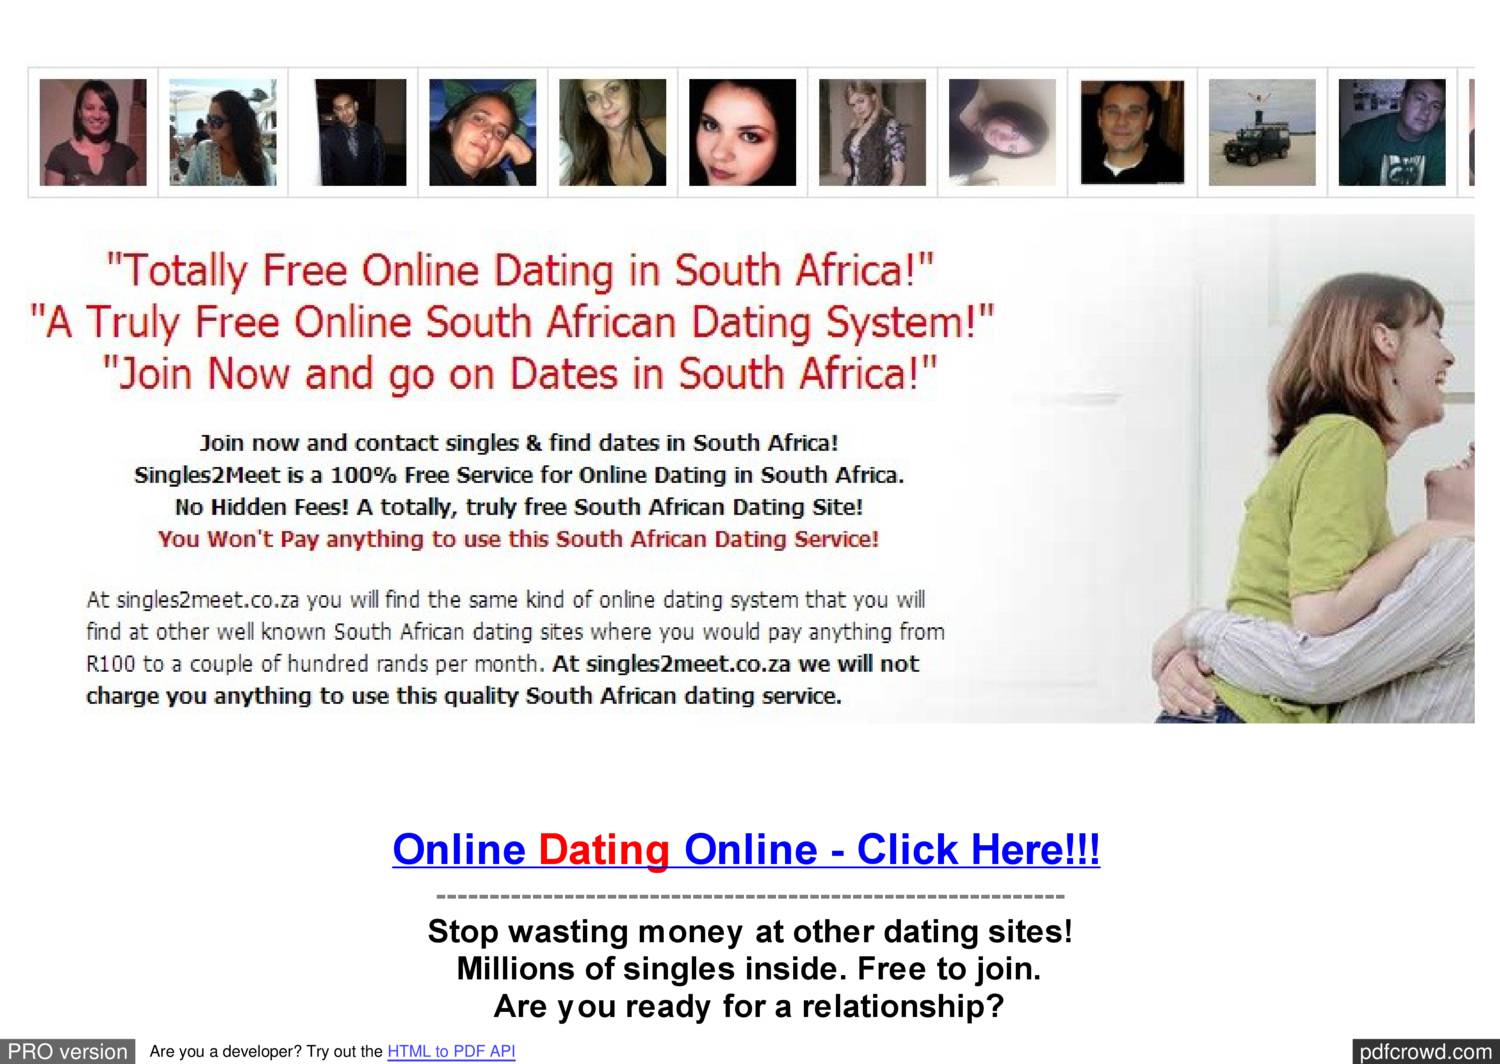 afrika dating hjemmesider relative dating metoder geologi